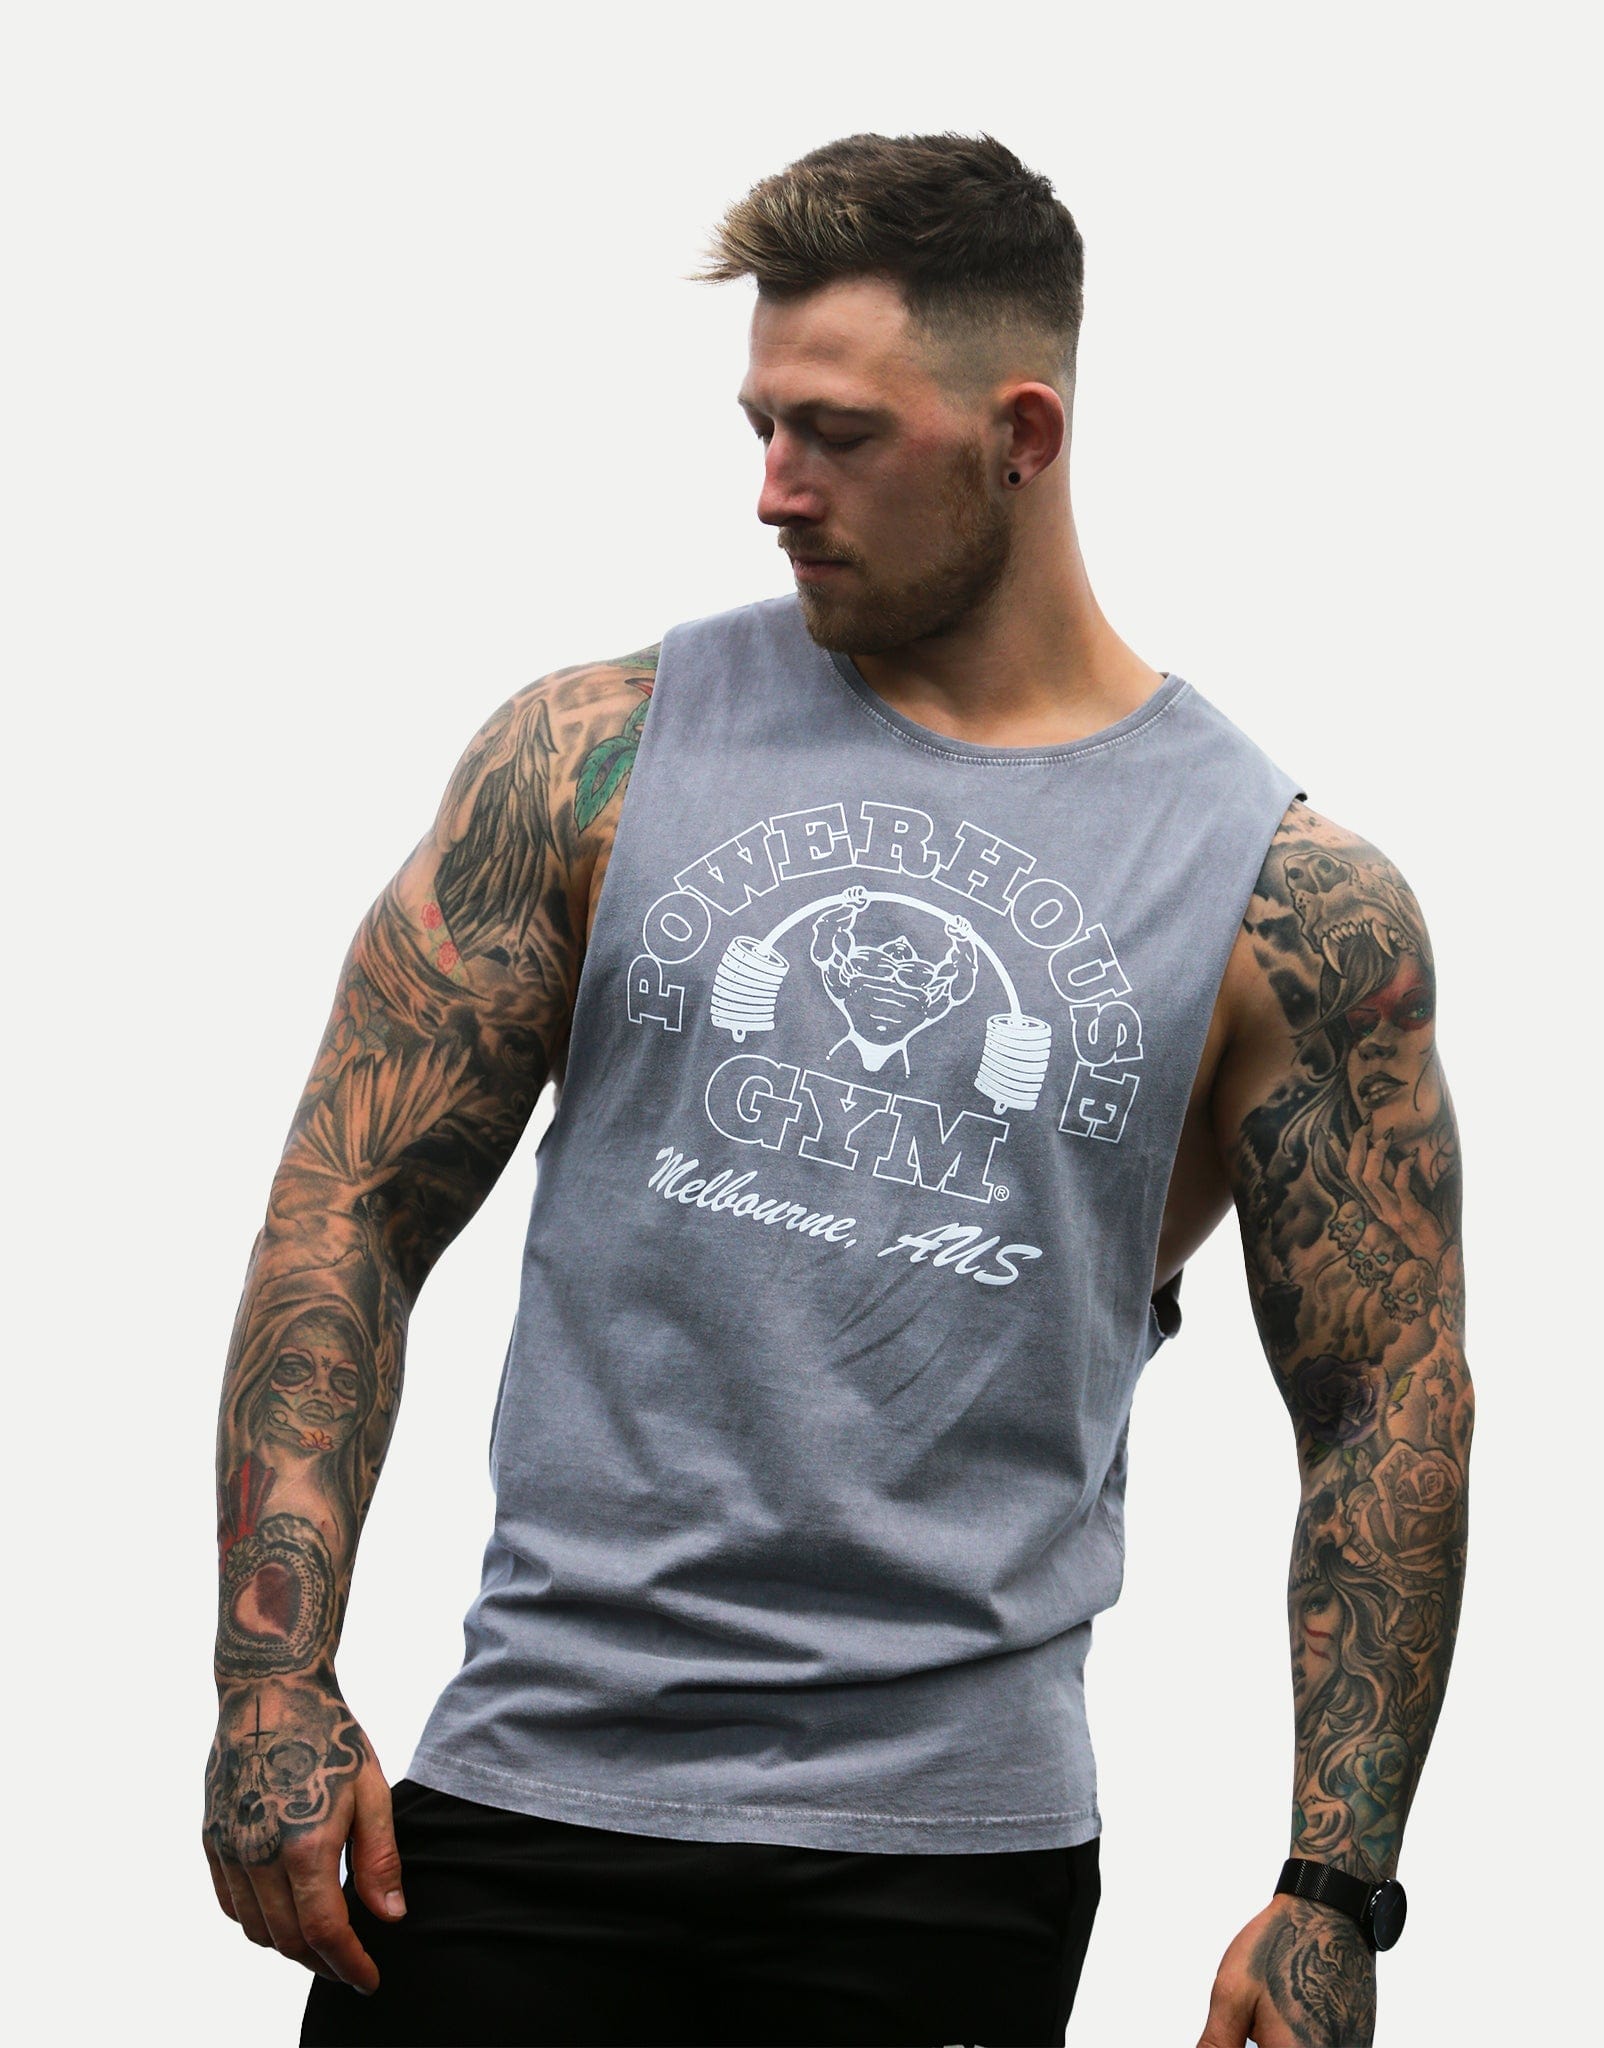 Powerhouse Gym Pro Shop Cut Off T-Shirt Grey